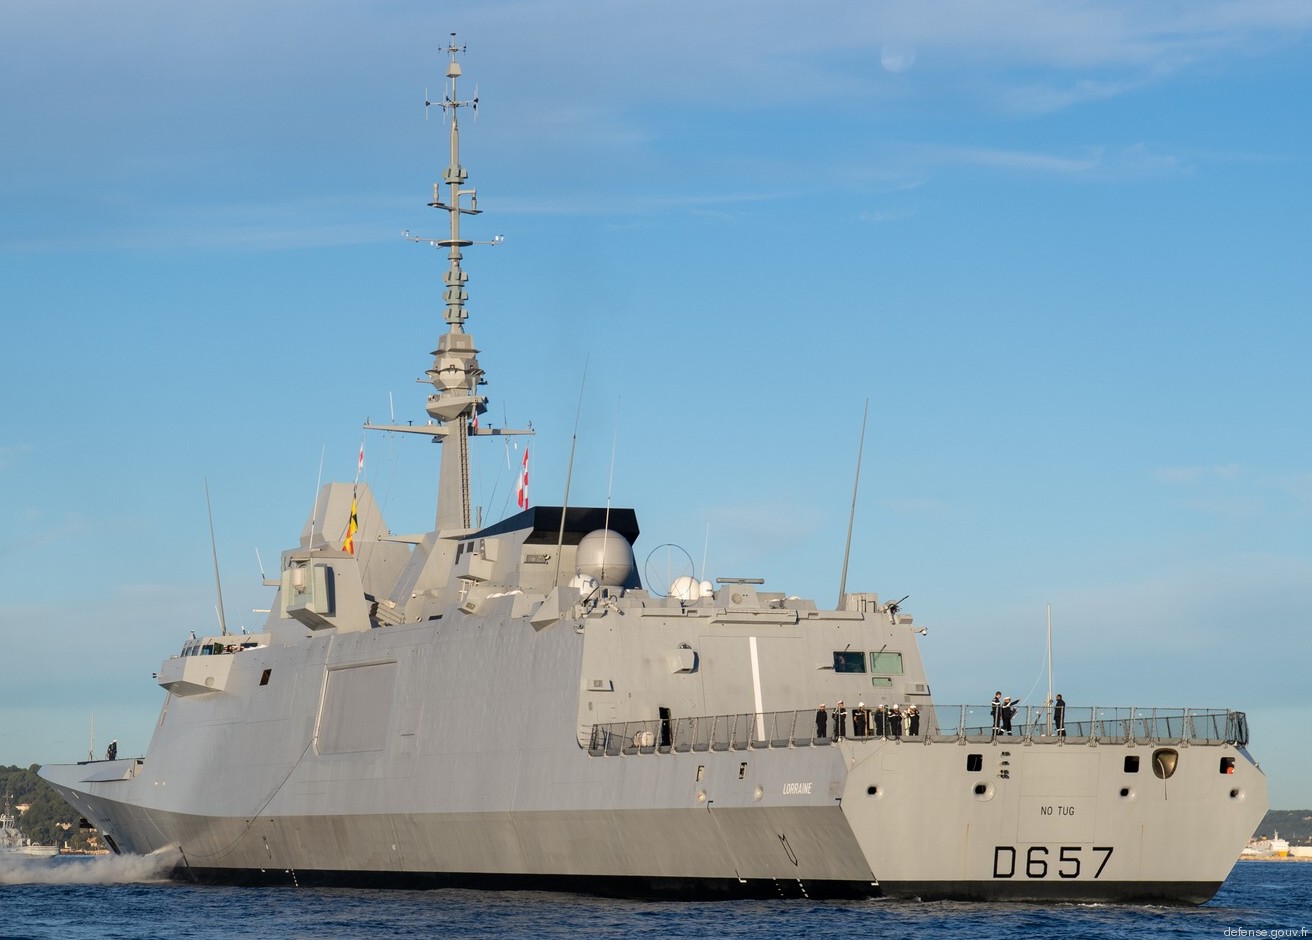 d-657 fs lorraine fremm aquitaine class frigate fregate multi purpose french navy marine nationale 16